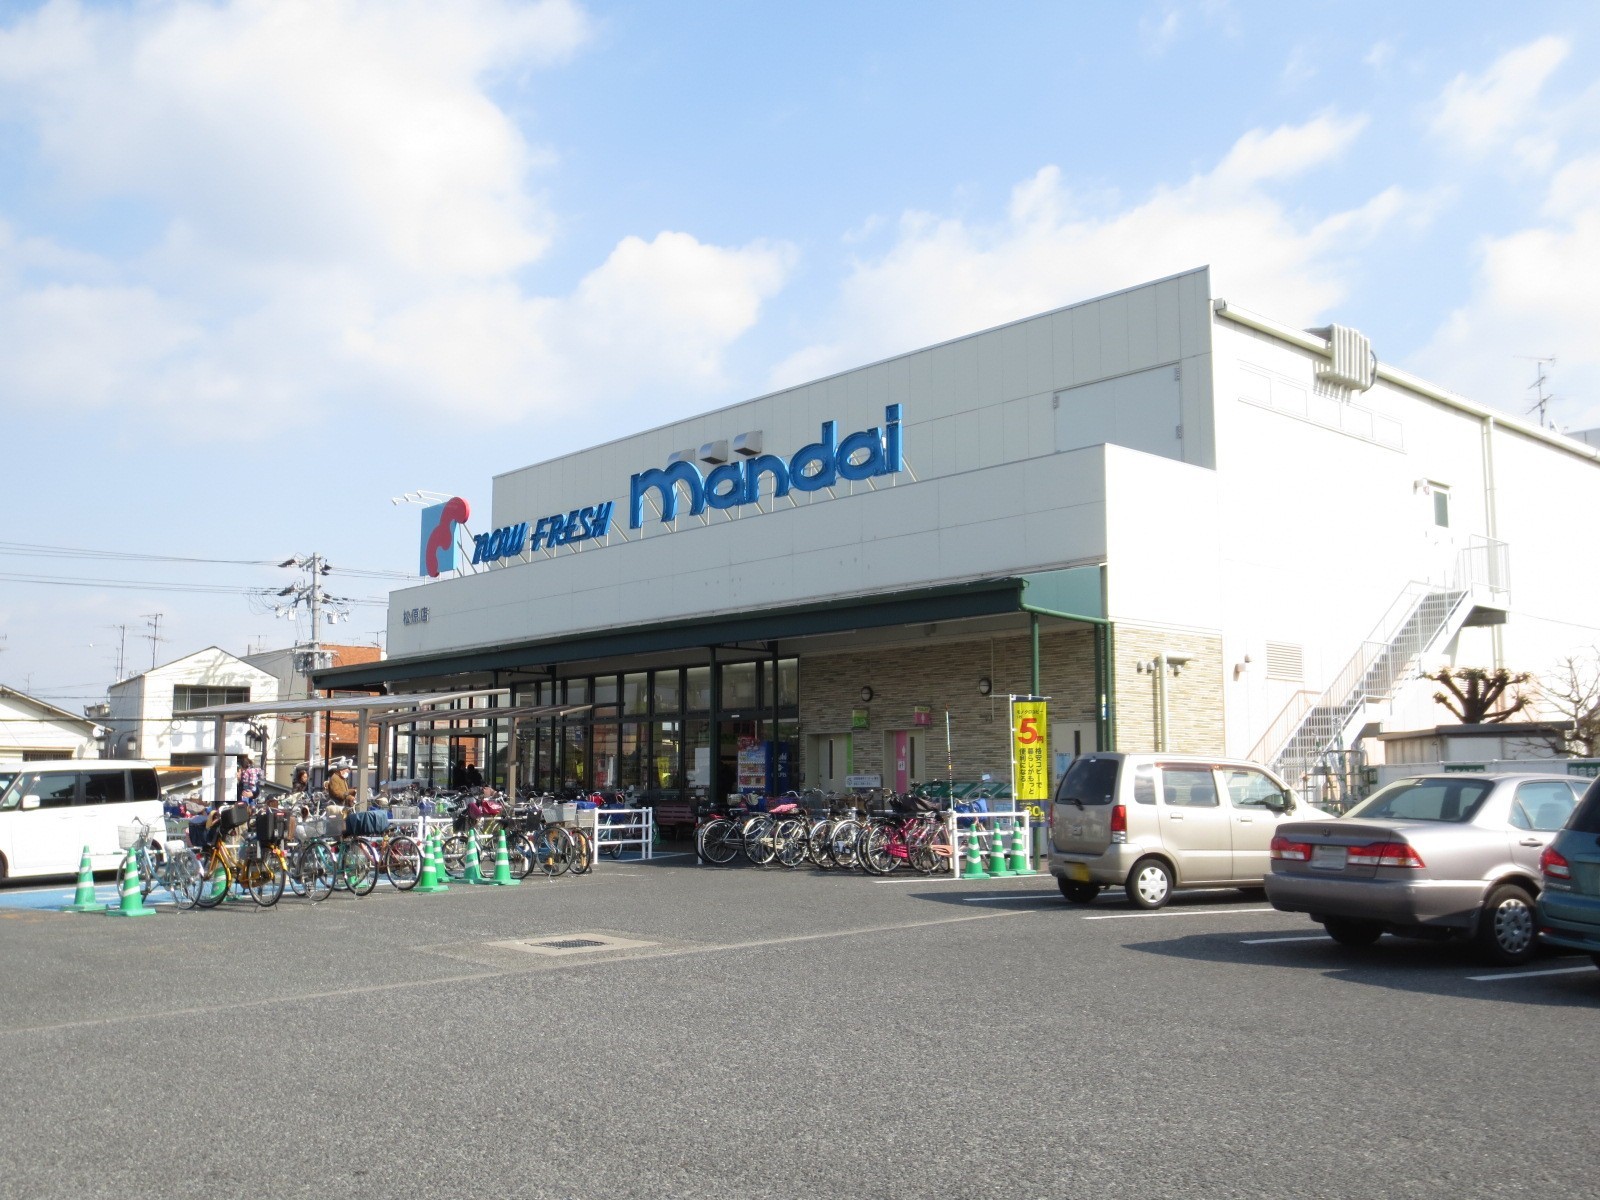 Supermarket. Bandai Matsubara store up to (super) 1486m